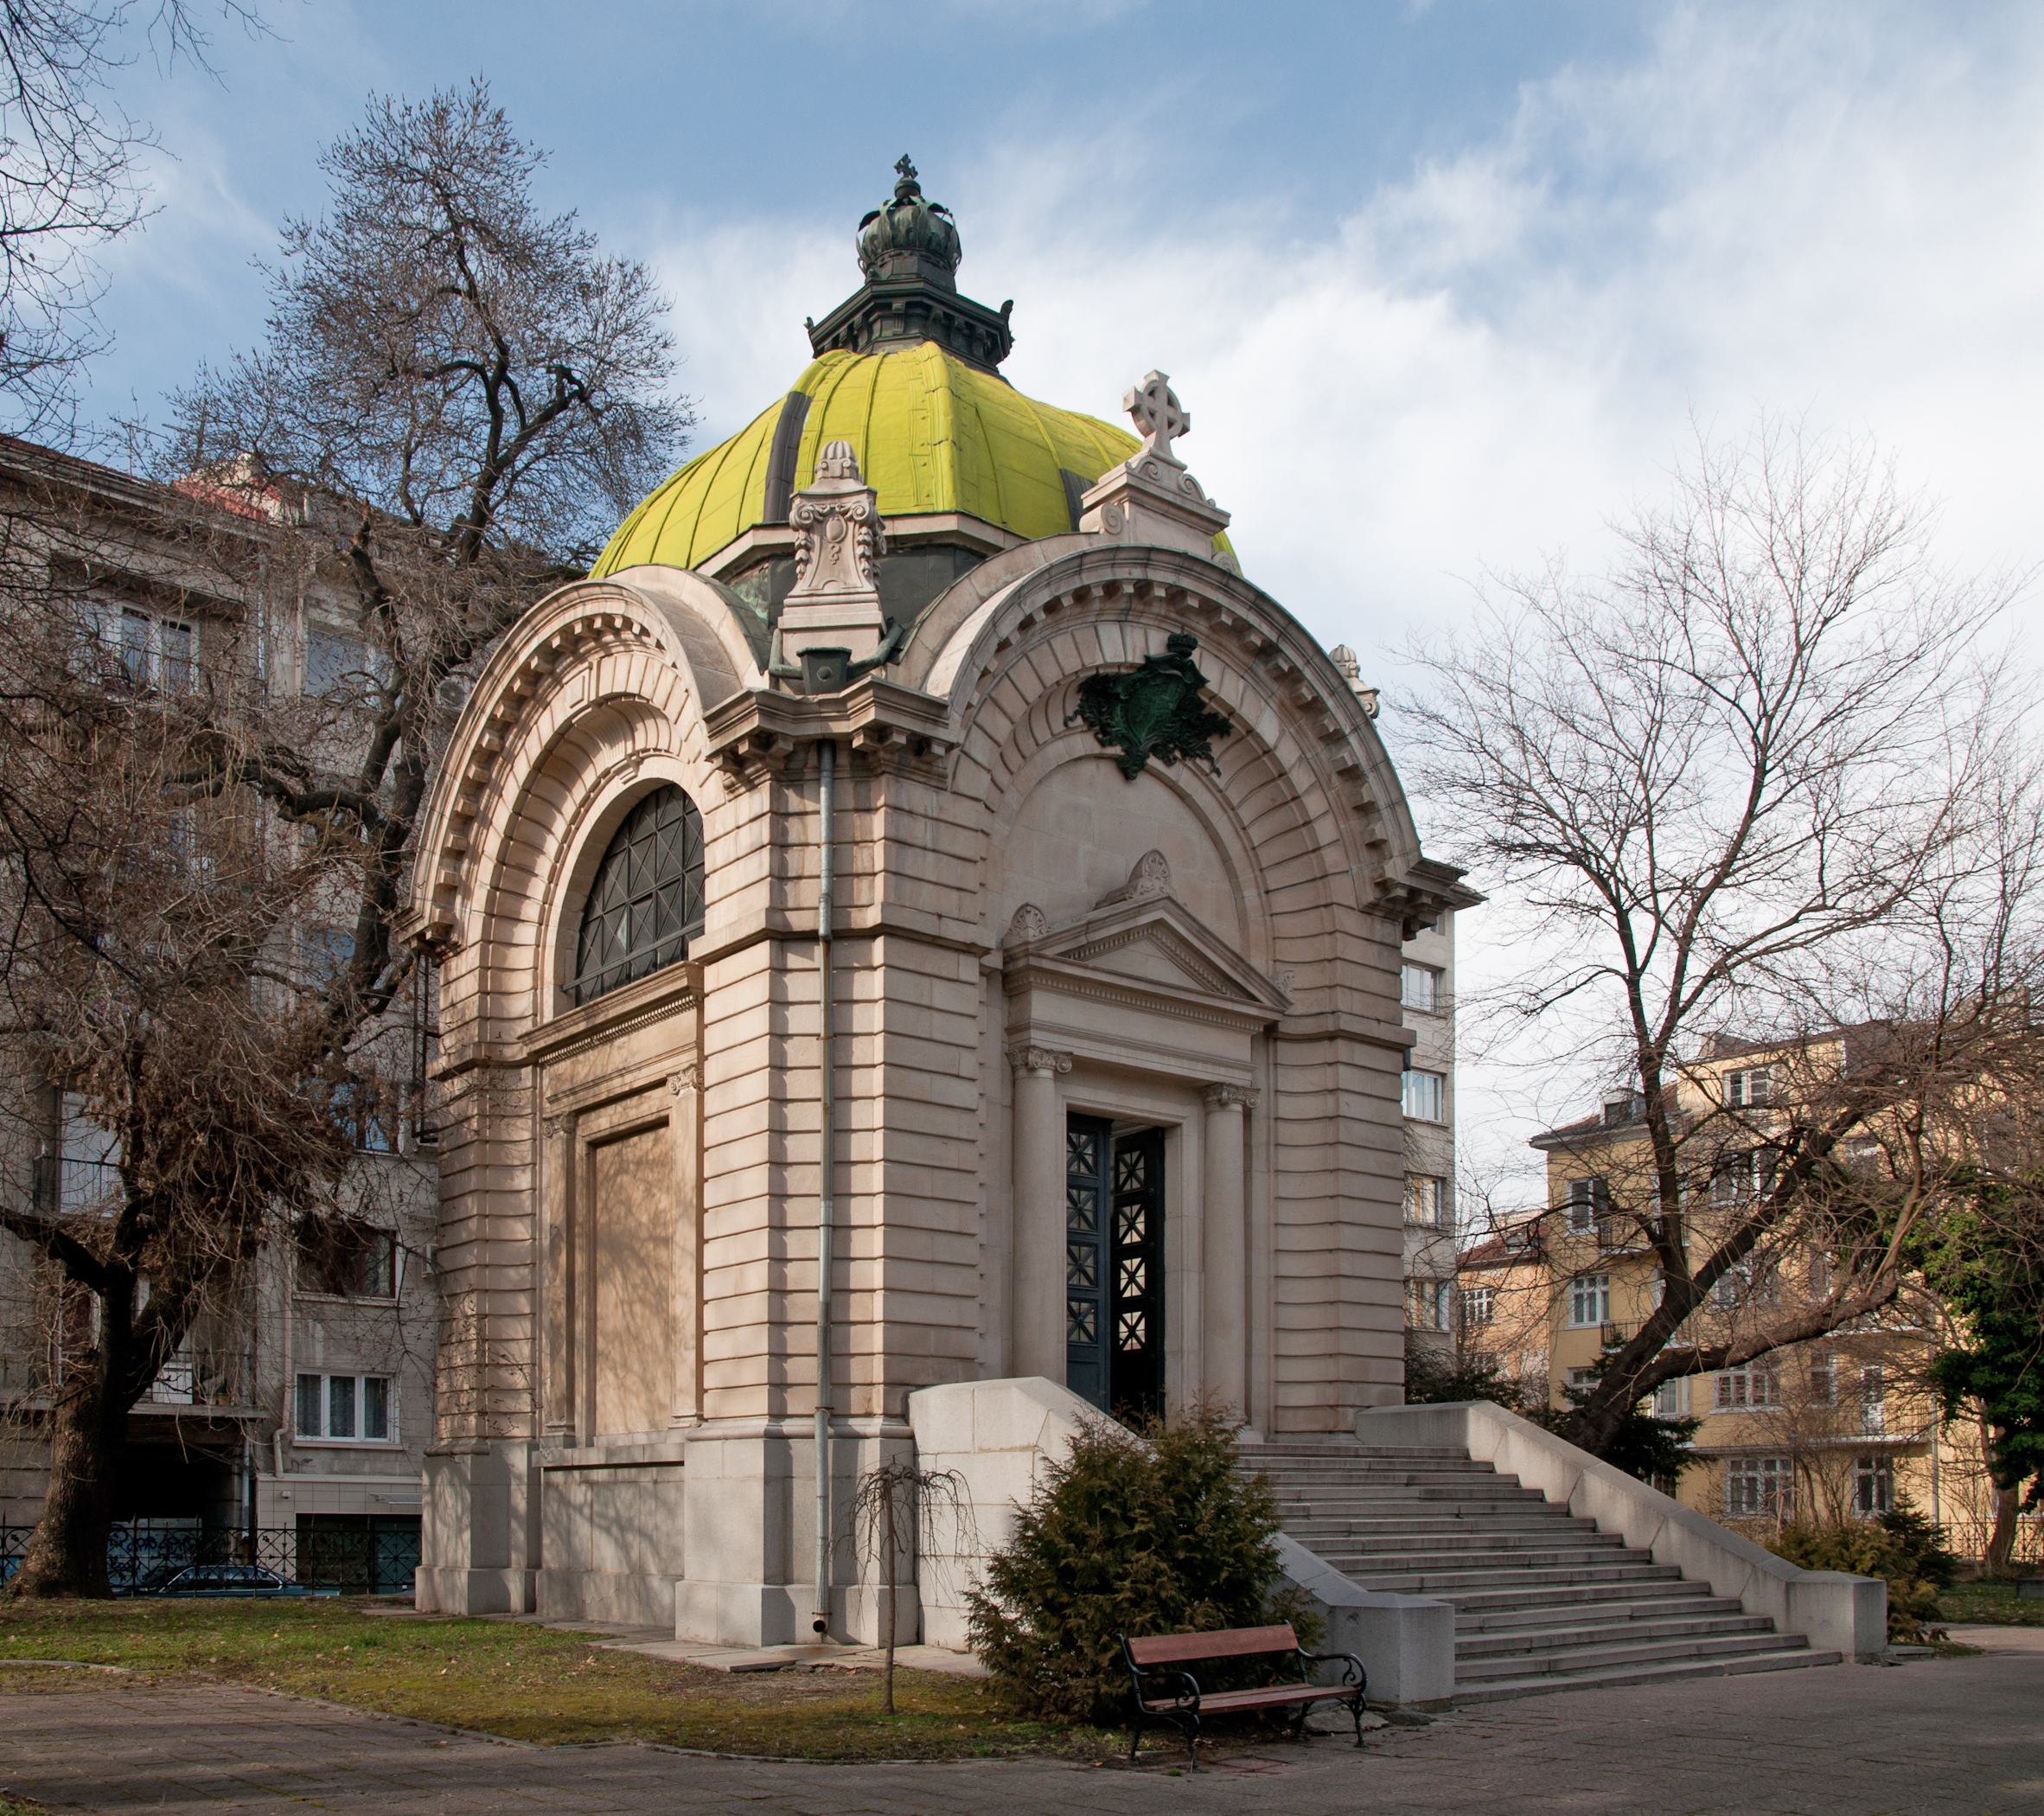 National mausoleum of Bulgaria - Battenberg Mausoleum